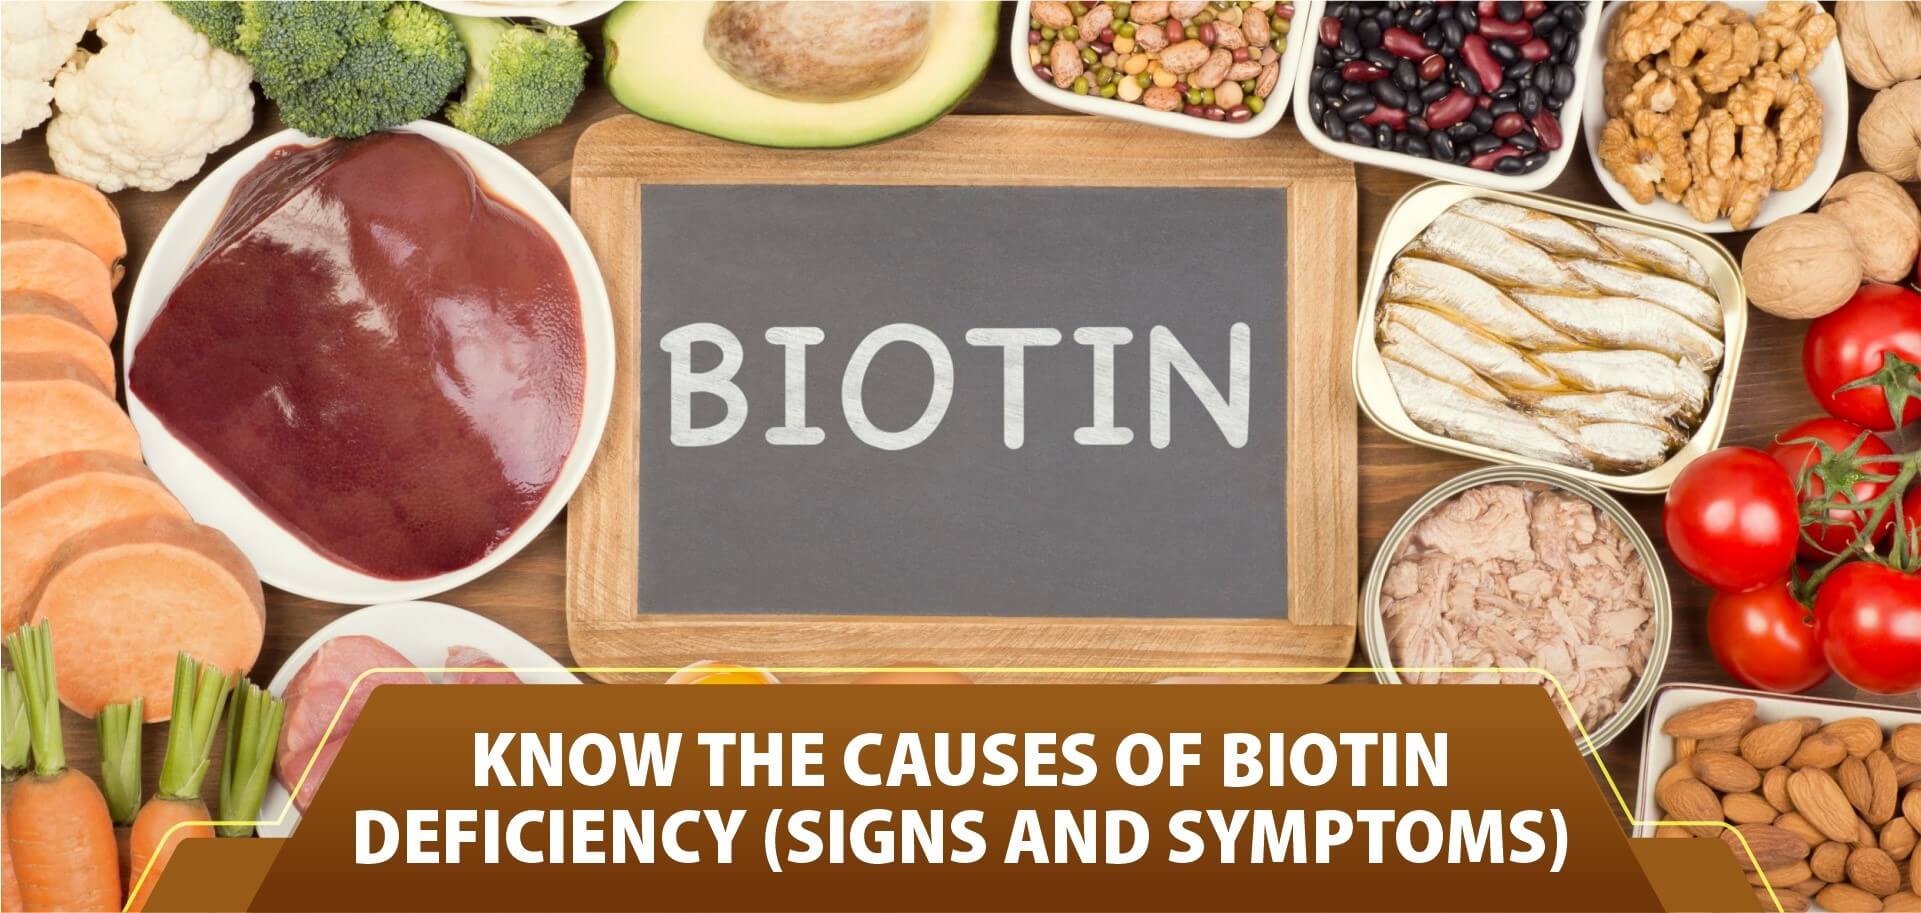 Biotin Hair Supplements - Side Effects, Dosage, Safety